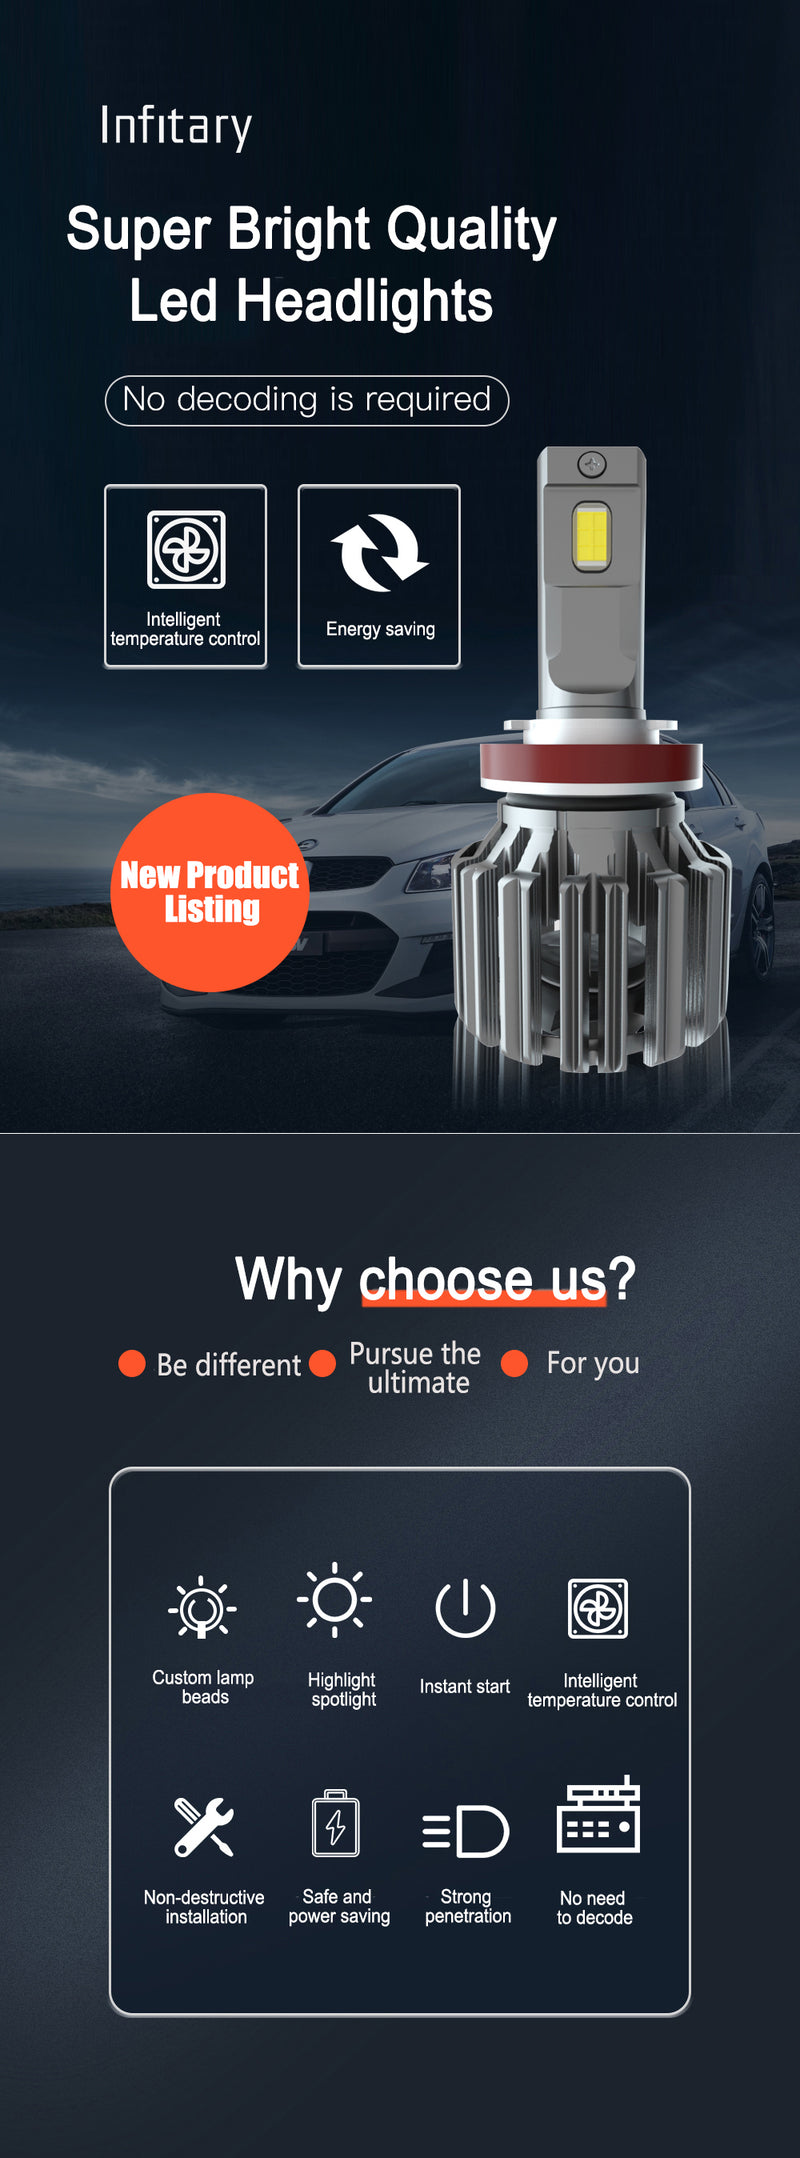 Q1 2PCS 220W 30000LM 6500K LED Car Headlight Bulbs H1 H4 H7 H11 9005 9006 with Decoding High Power Auto Lamp